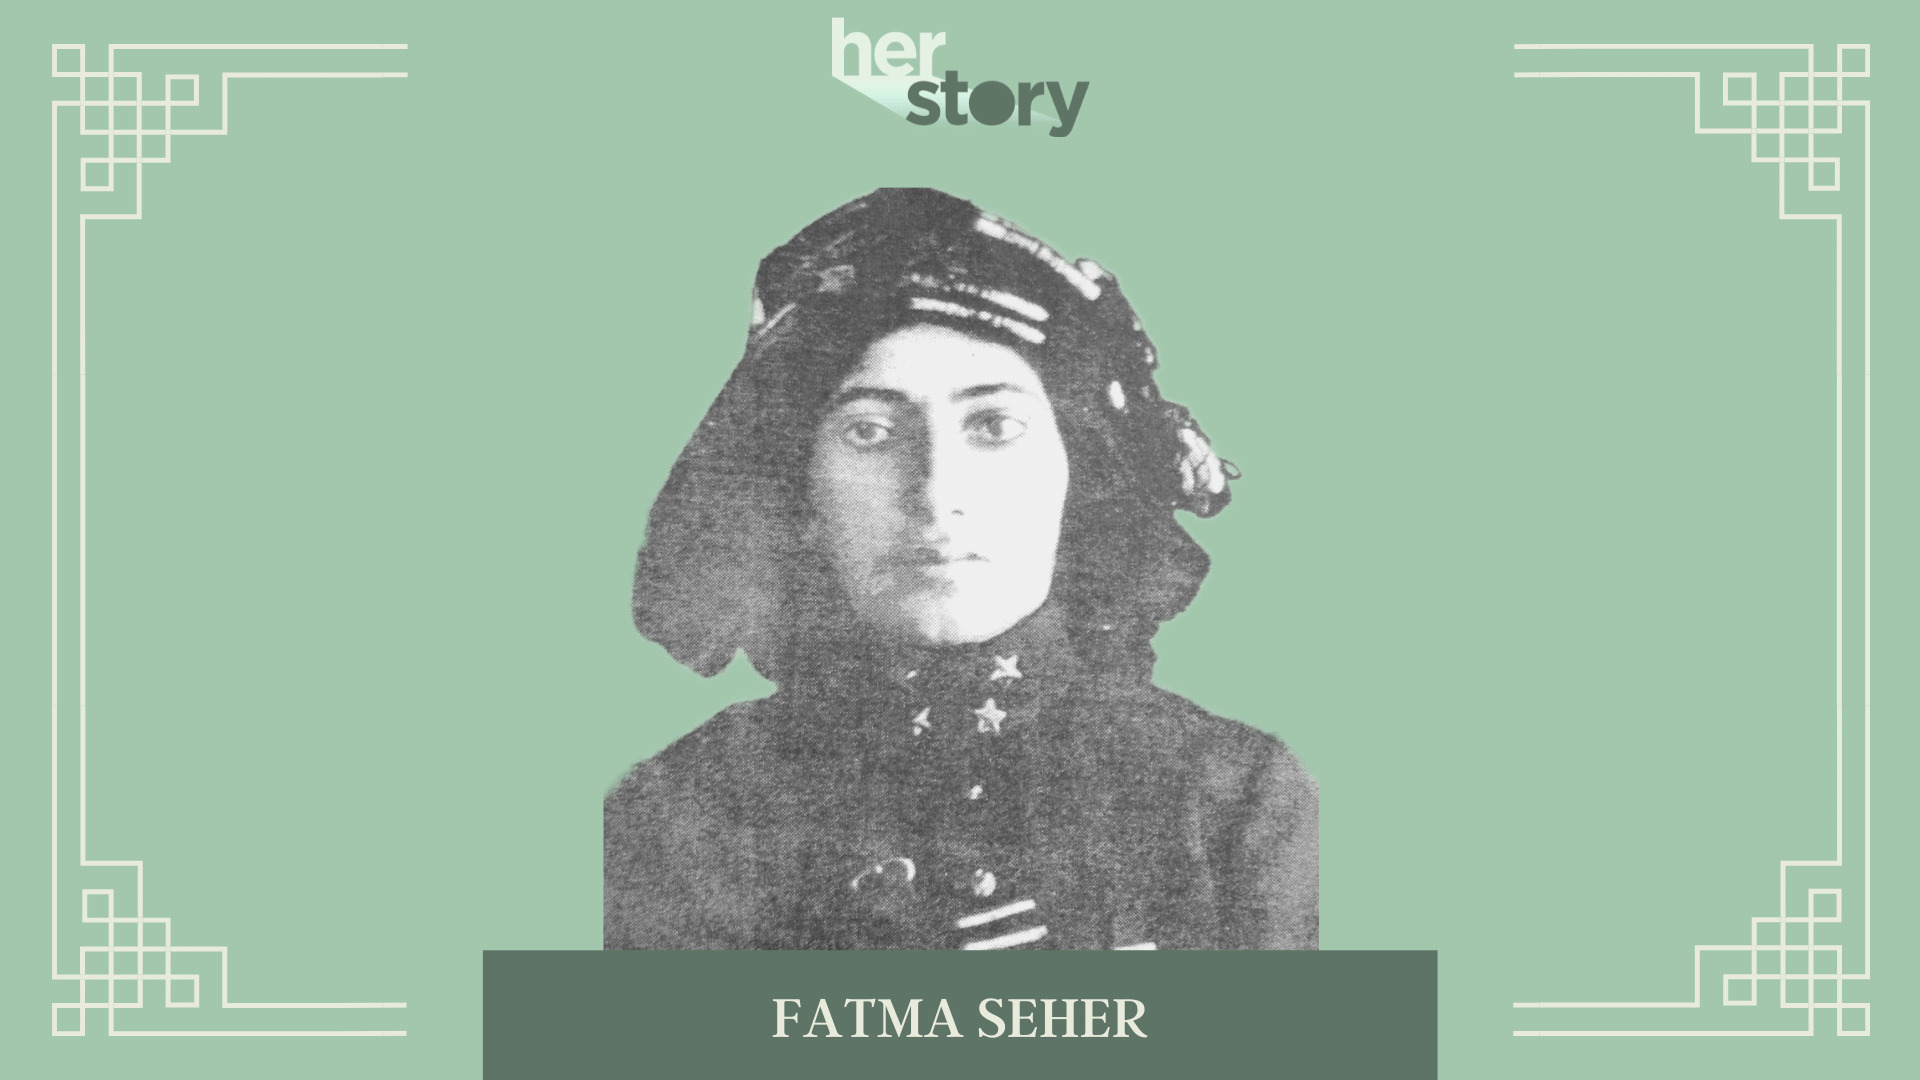 Fatma Seher